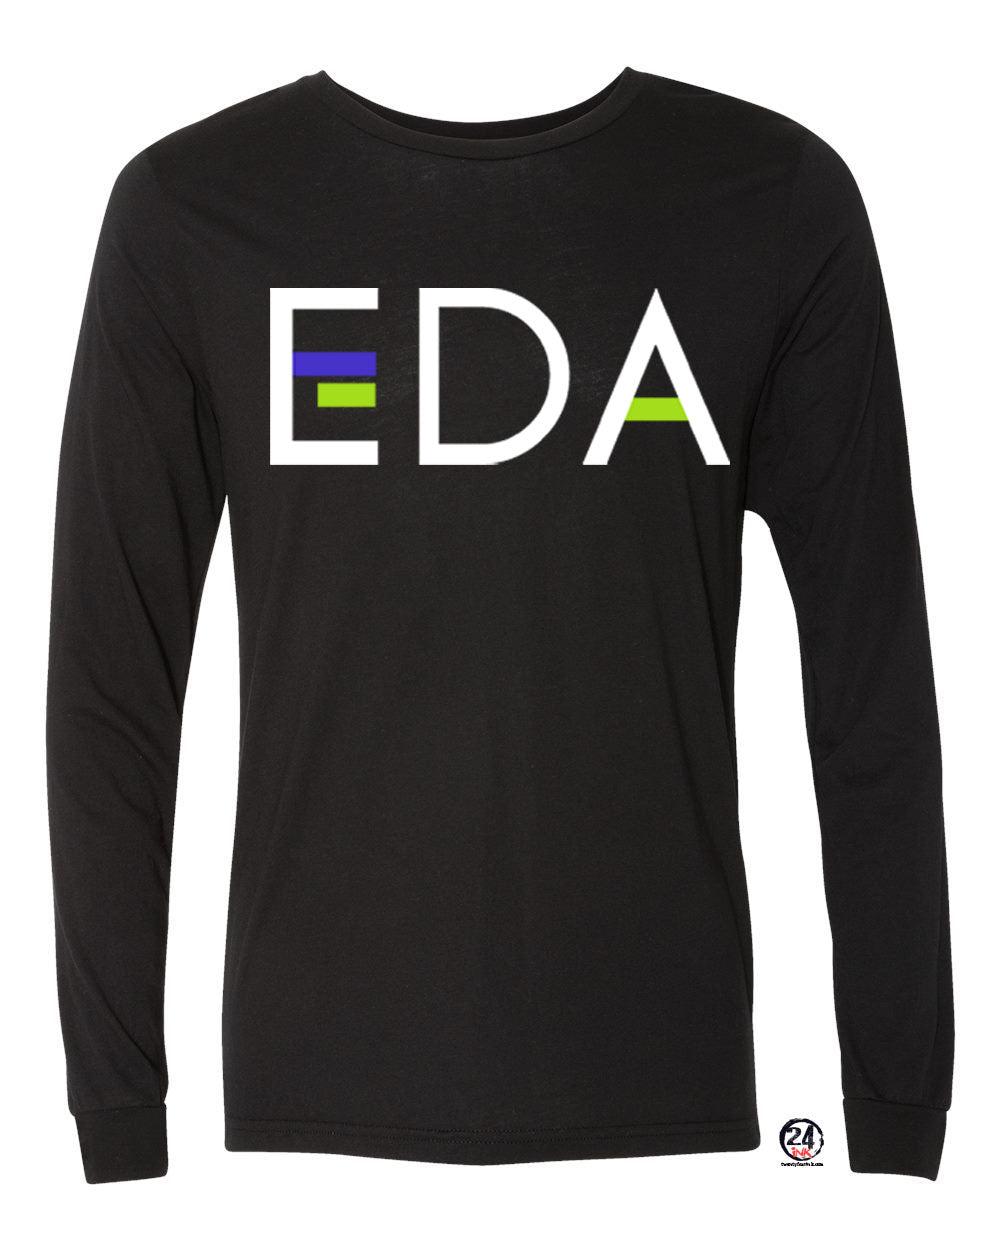 Evolution Dance Arts Design 4 Long Sleeve Shirt